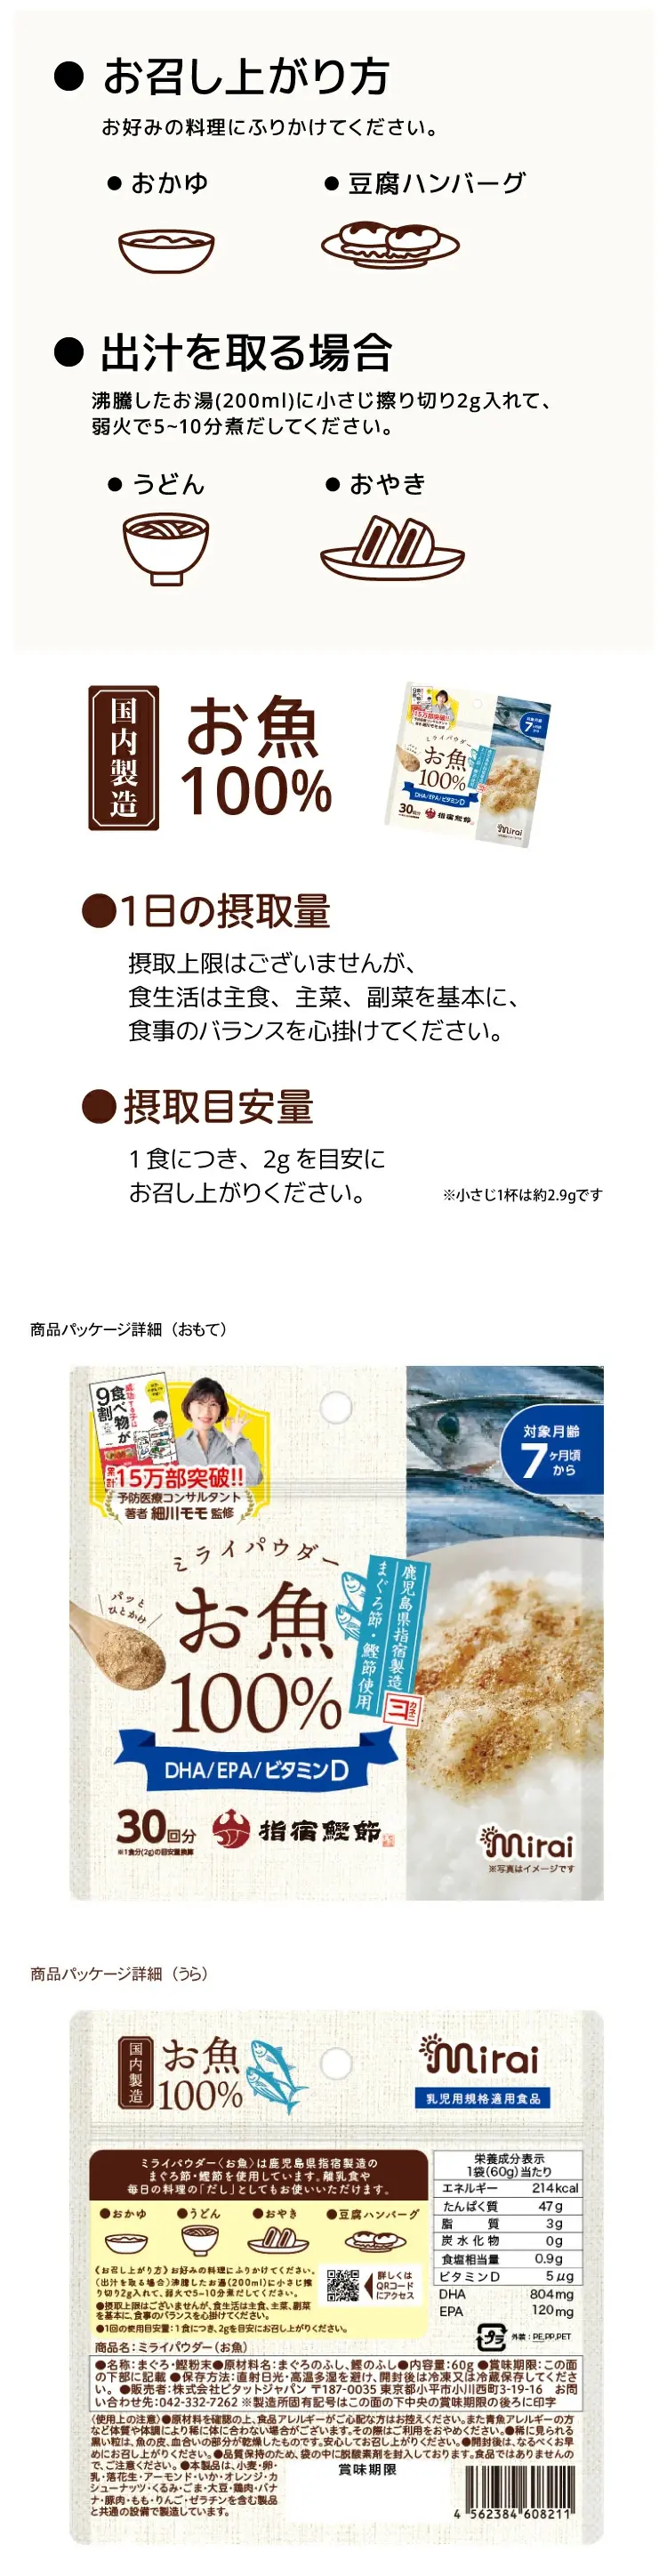 mirai 寶寶魚粉(100%純魚)